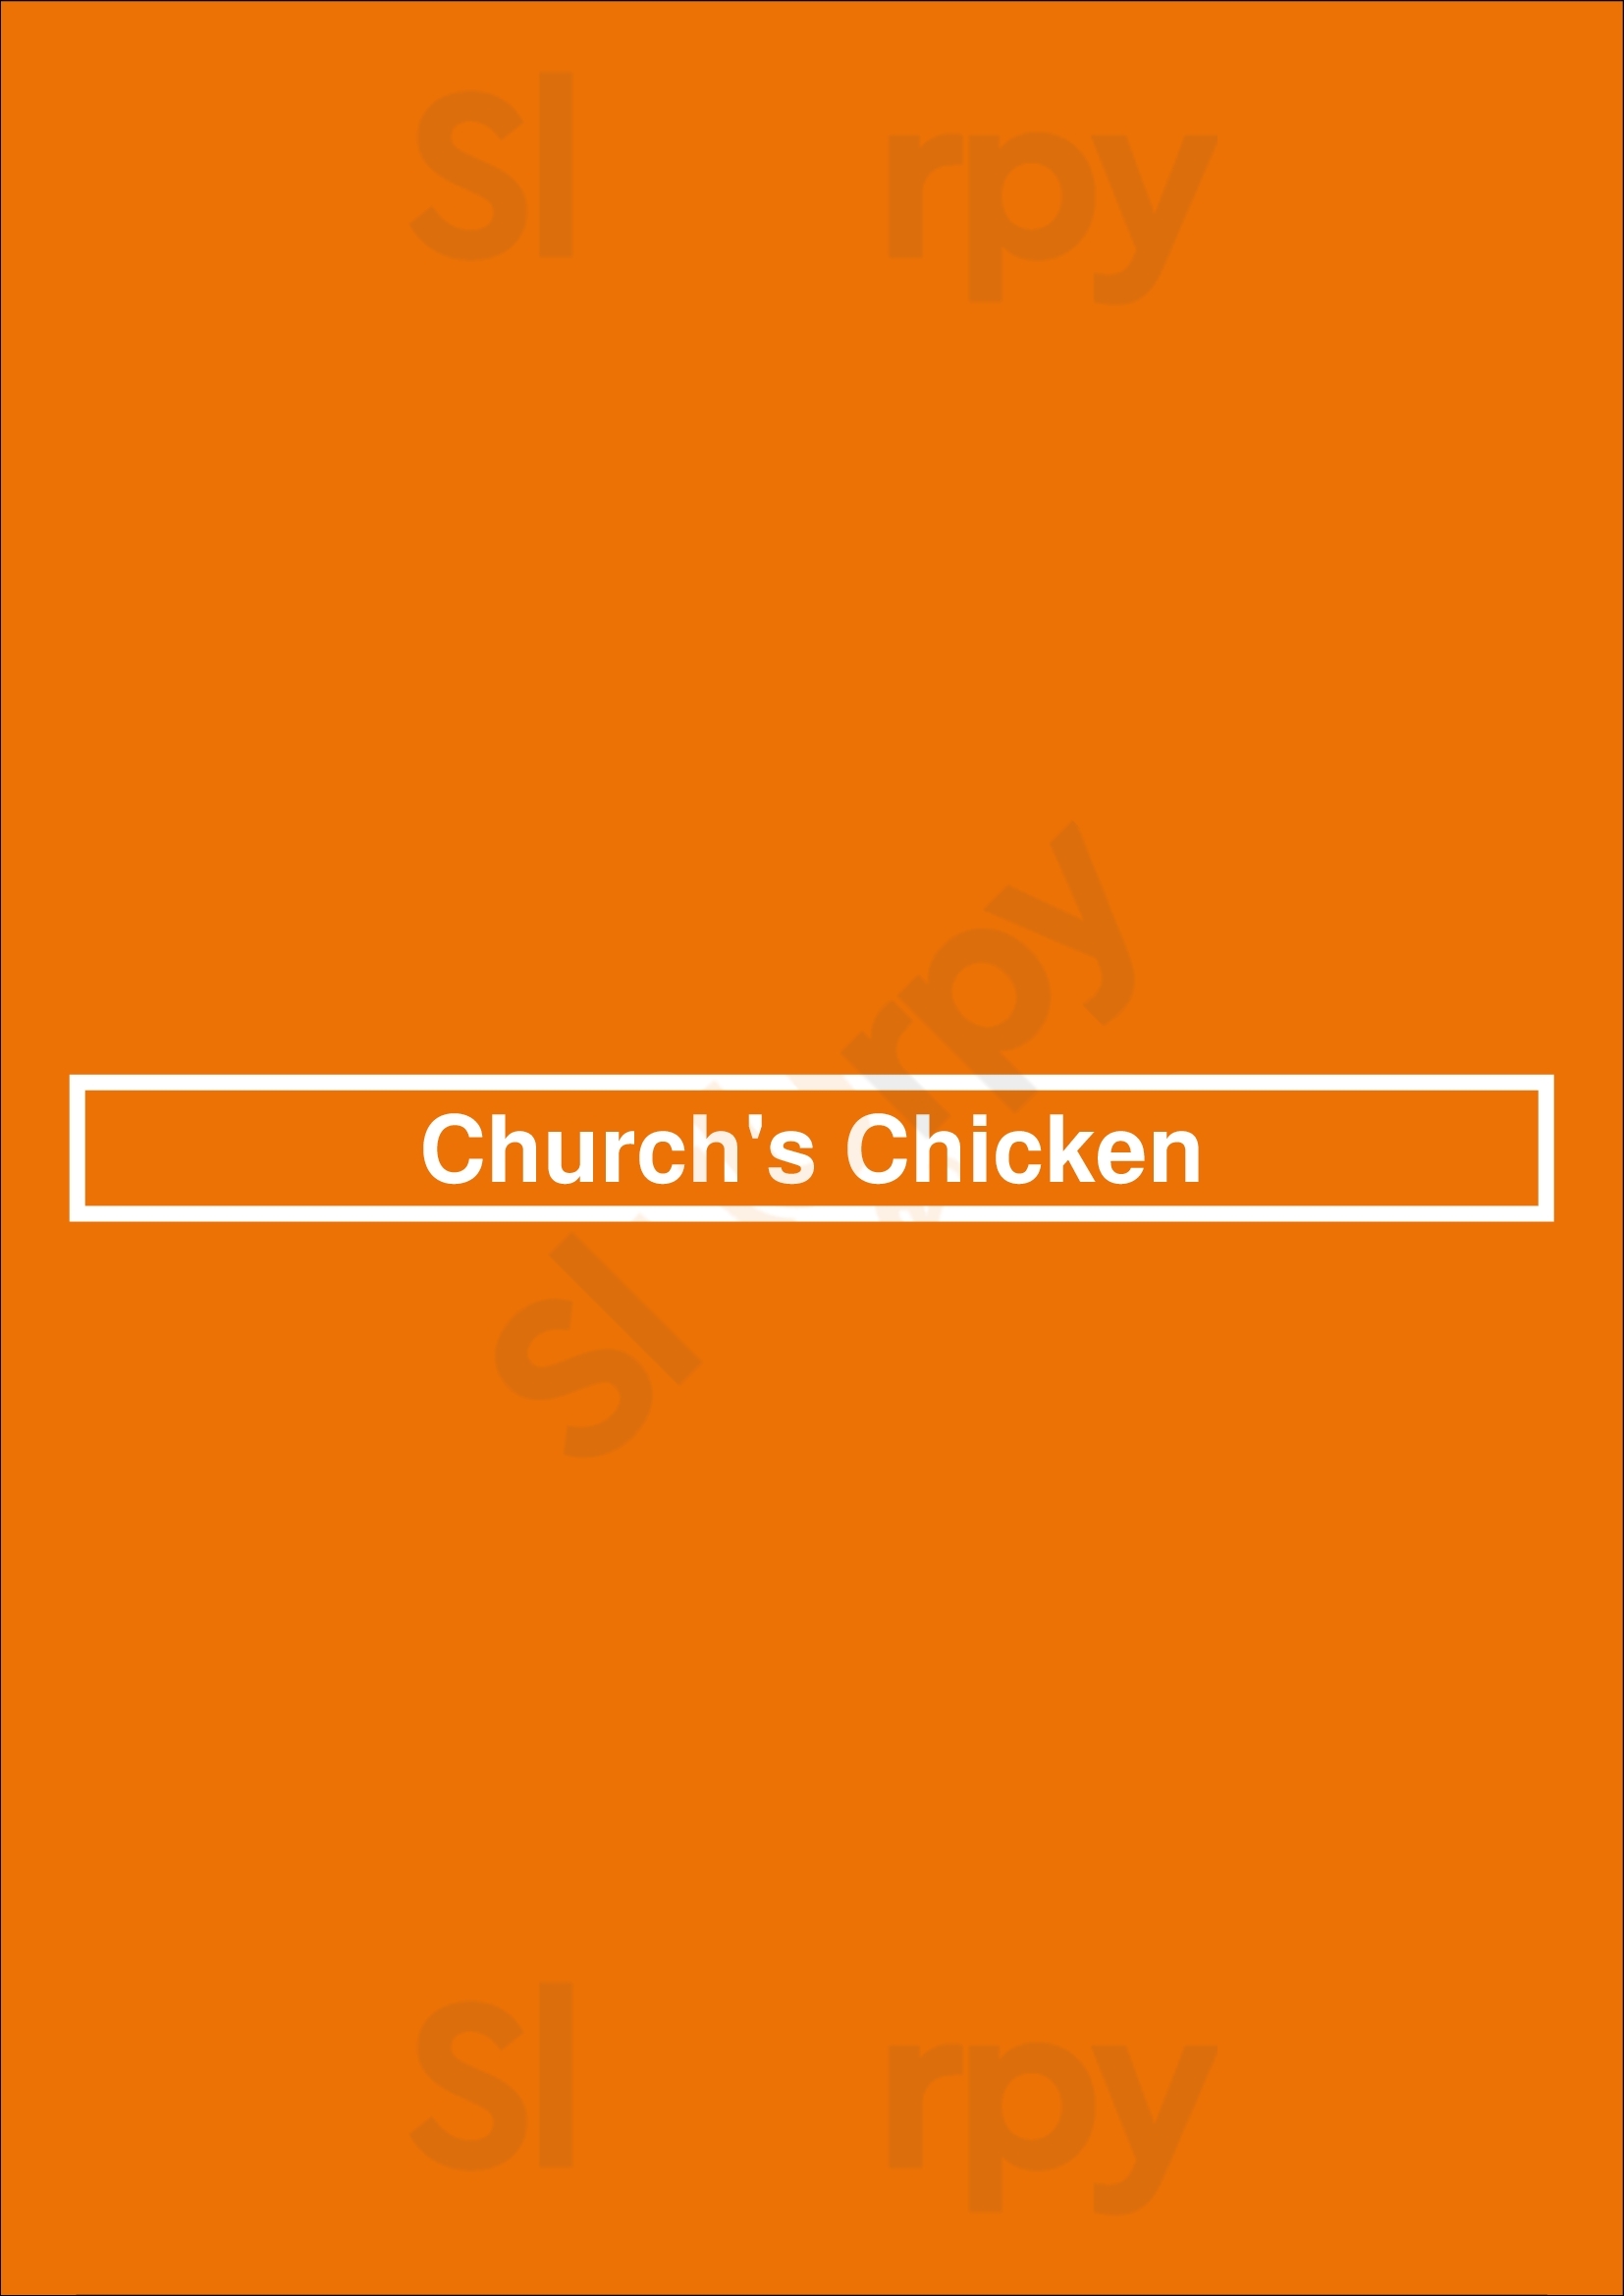 Church's Texas Chicken New Orleans Menu - 1